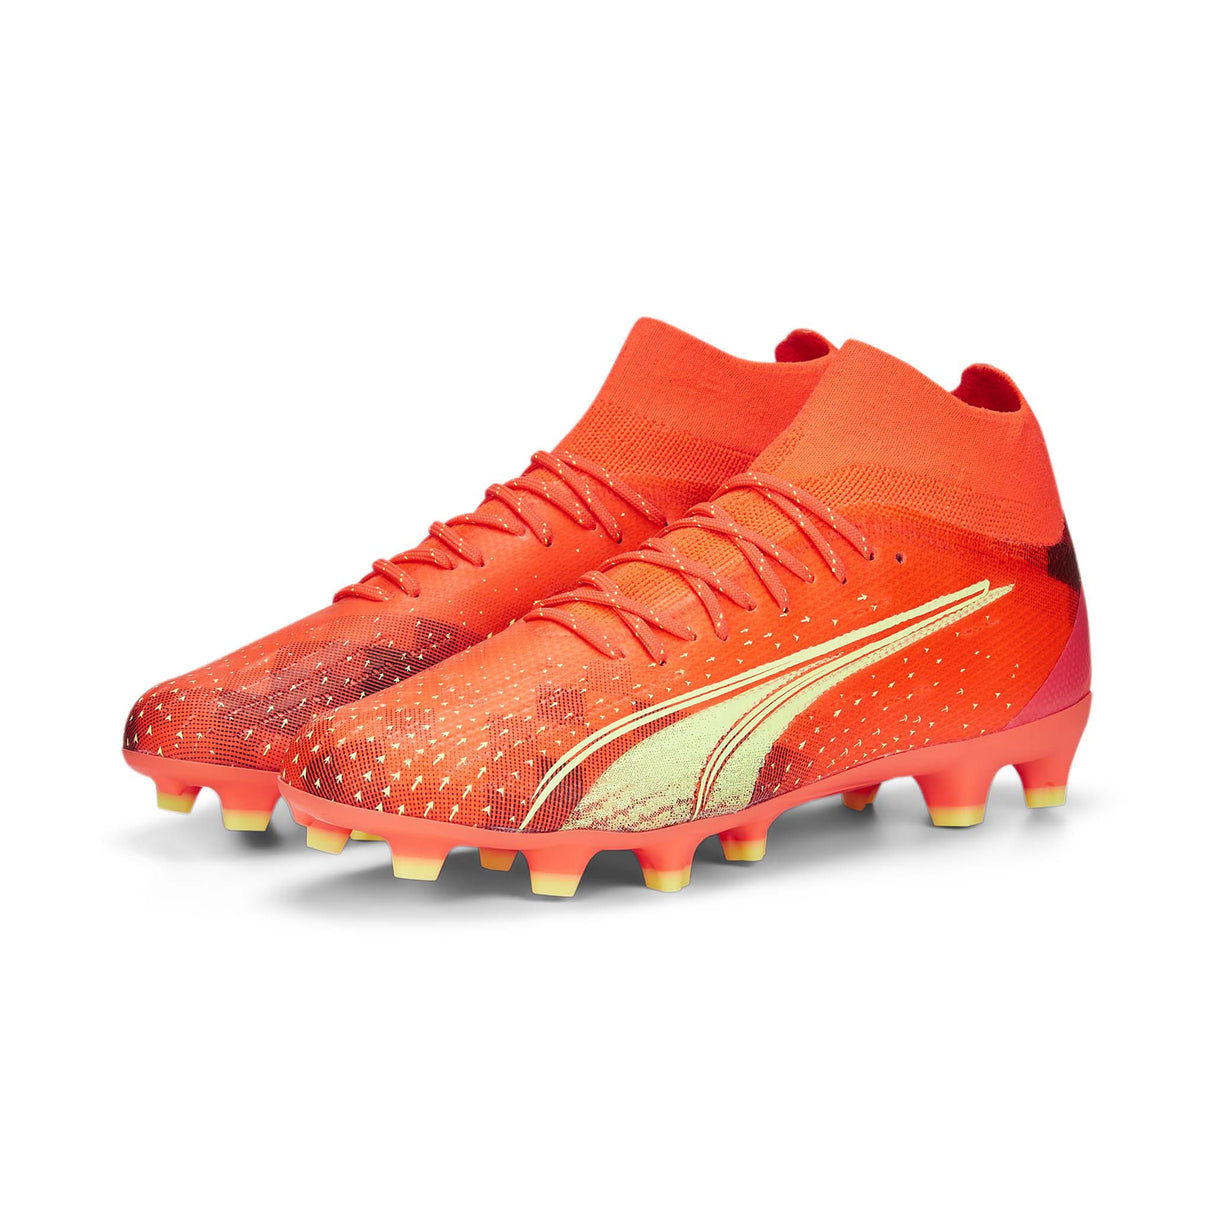 Puma Ultra Pro FG/AG souliers de soccer fiery coral / Fizzy light / Puma black paire